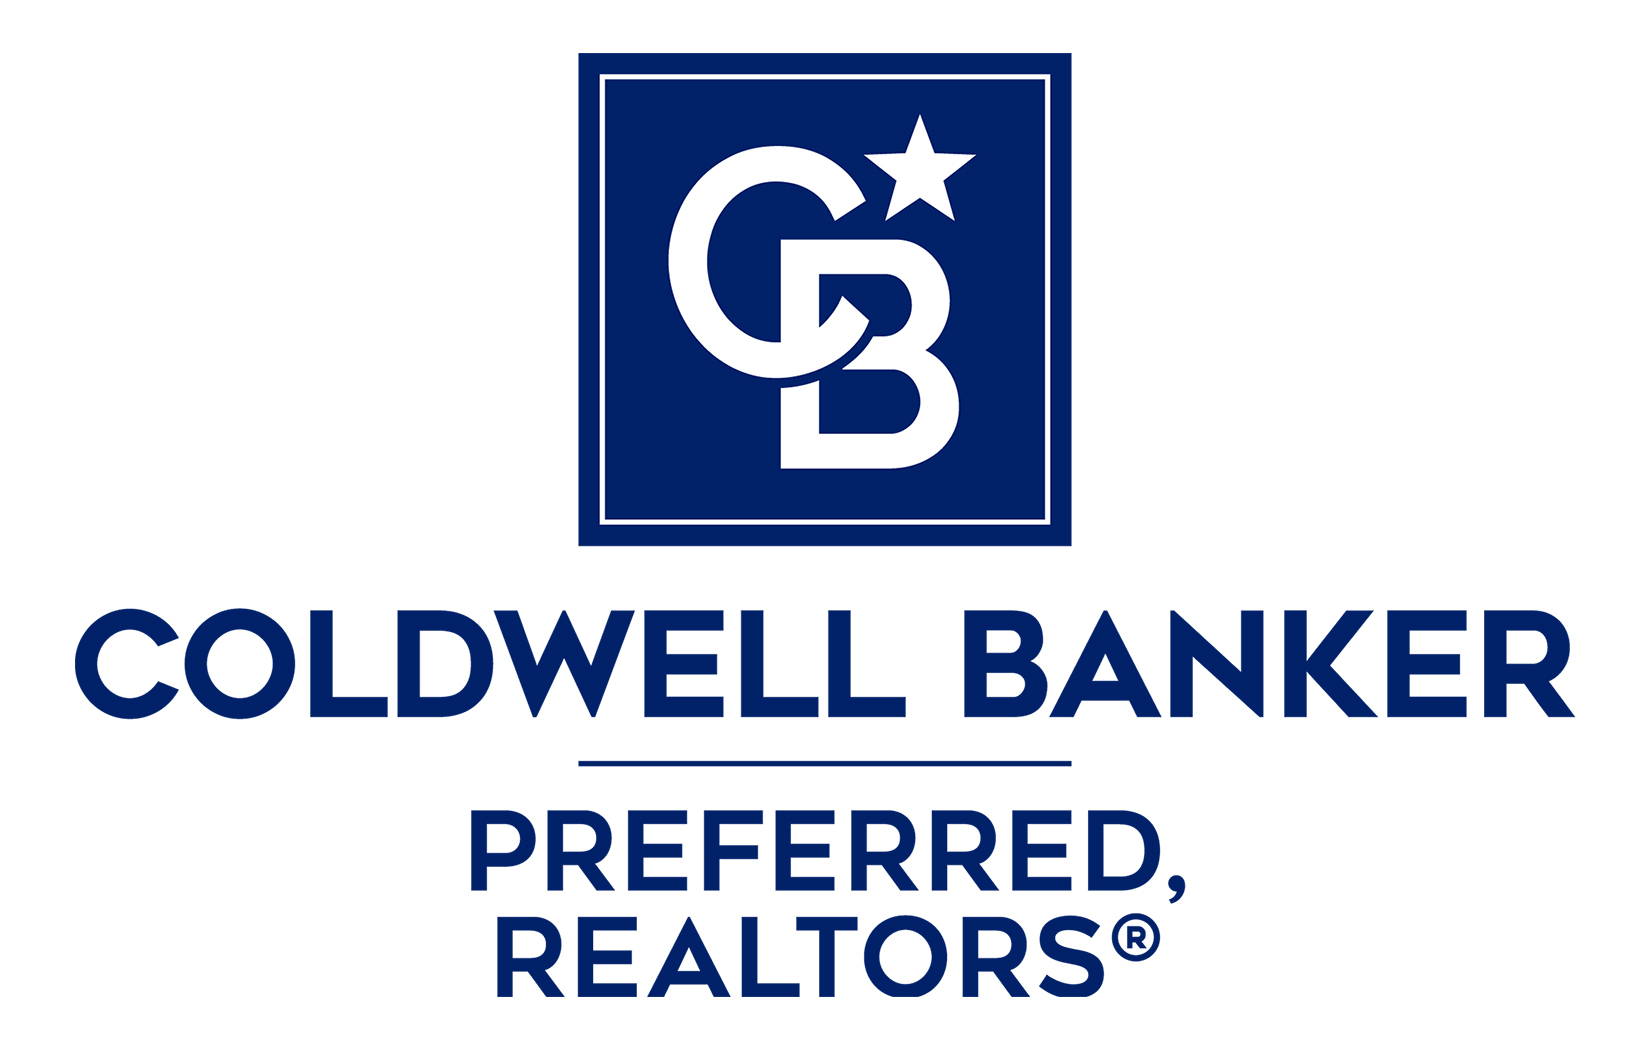 Coldwell Banker Preferred, Realtors, Associate Real Estate Broker in Bakersfield, Preferred, Realtors